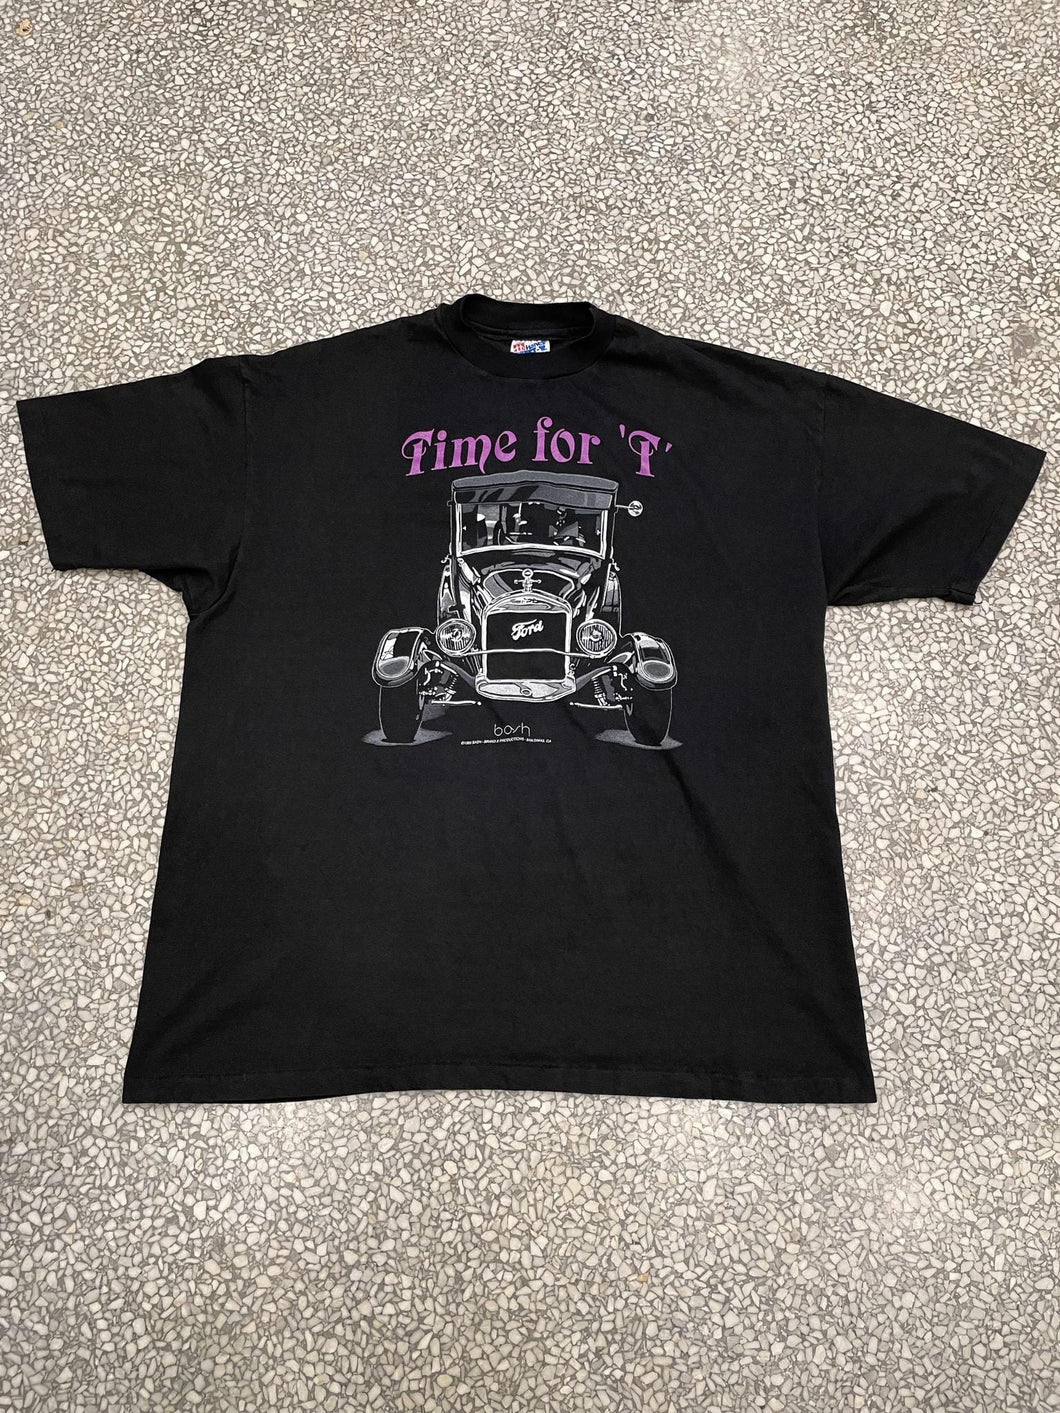 Ford Time For 'F' Vintage 1993 ABC Vintage 